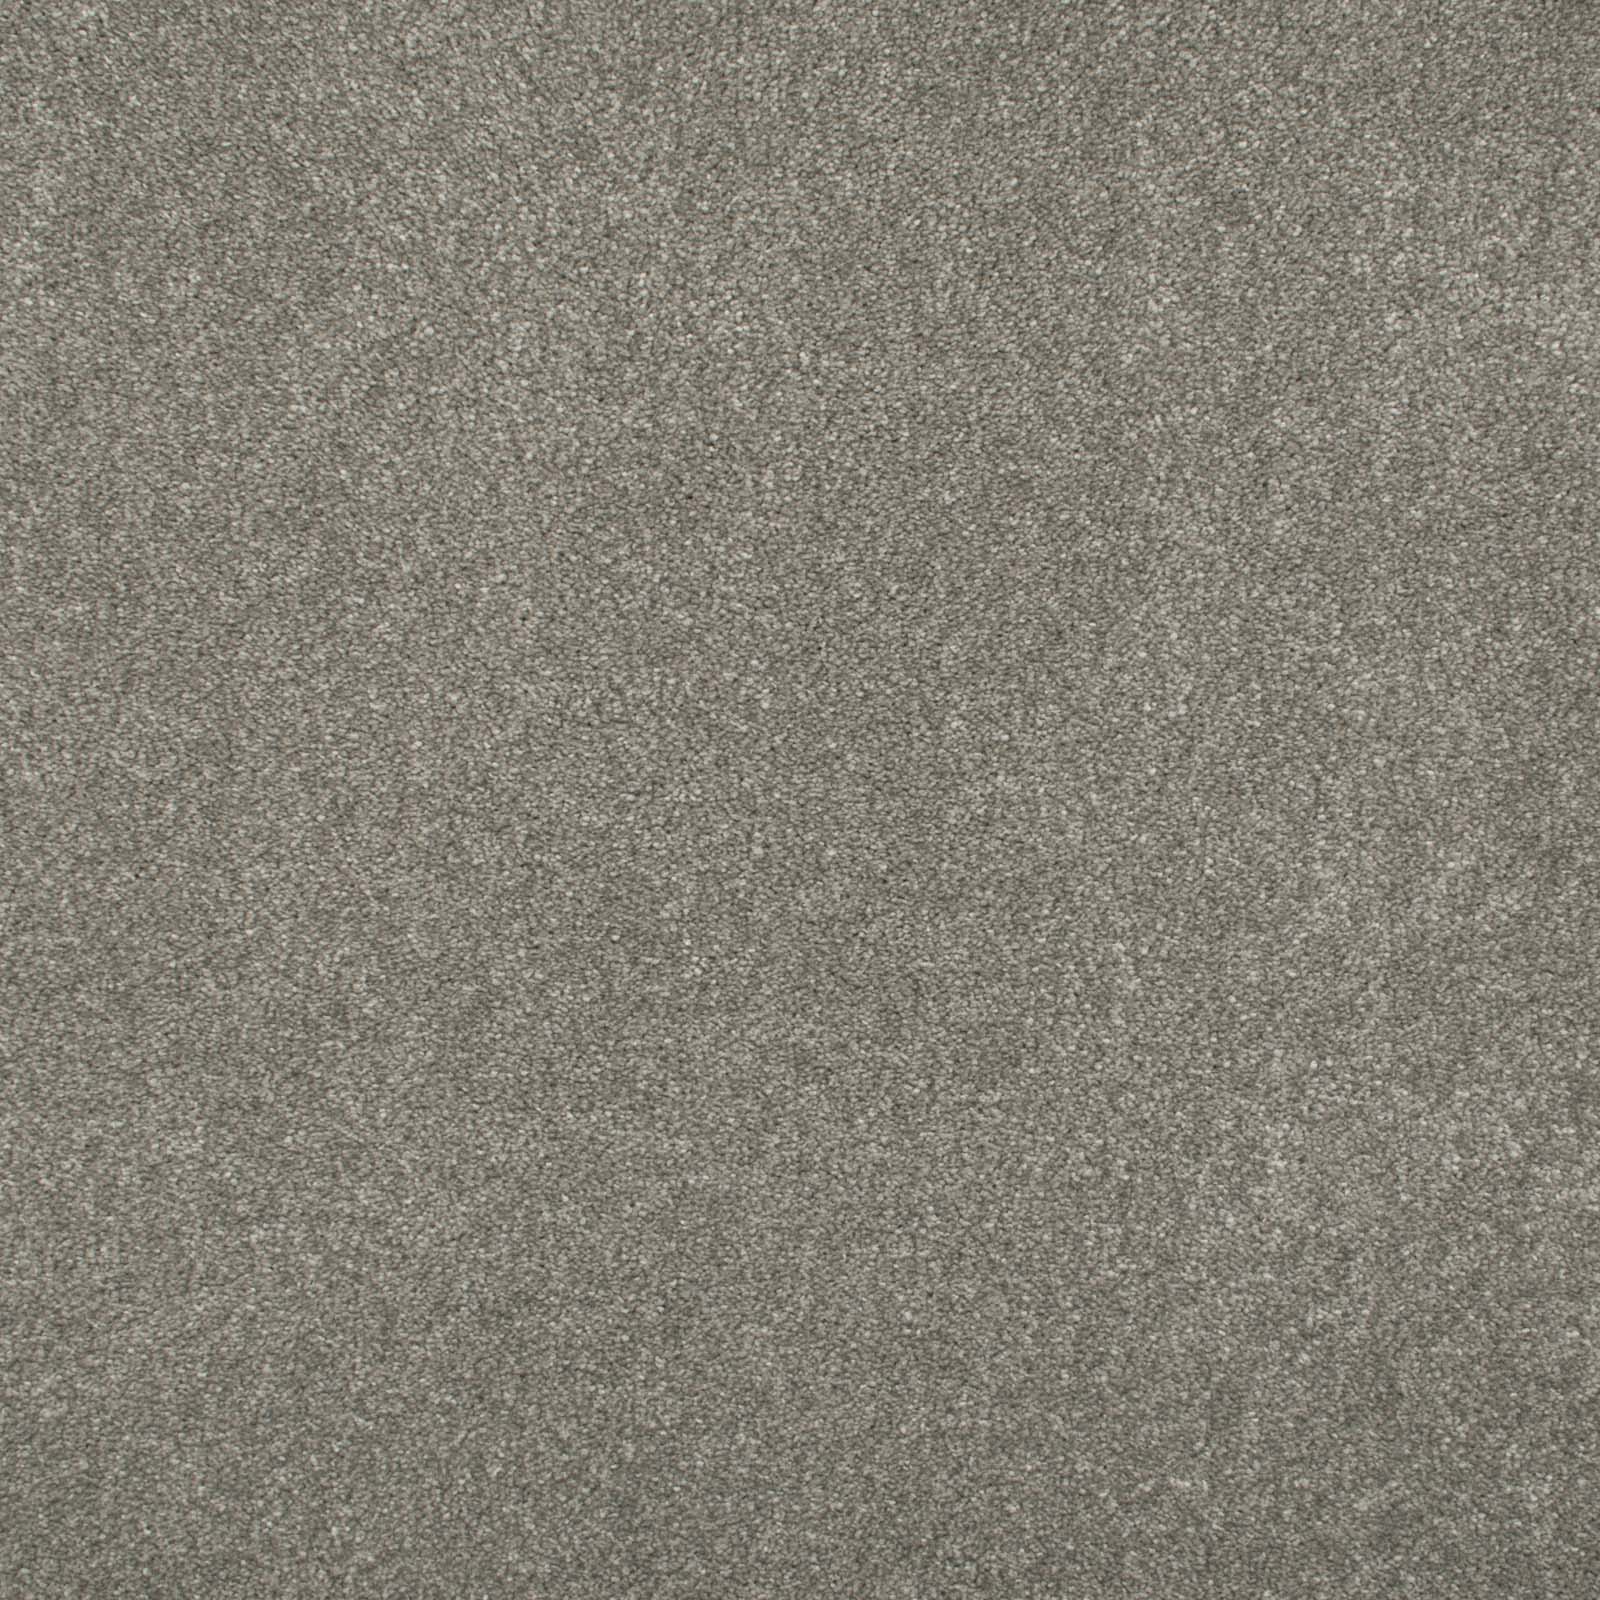 Stone Grey Luxury Saxony Carpet - Far